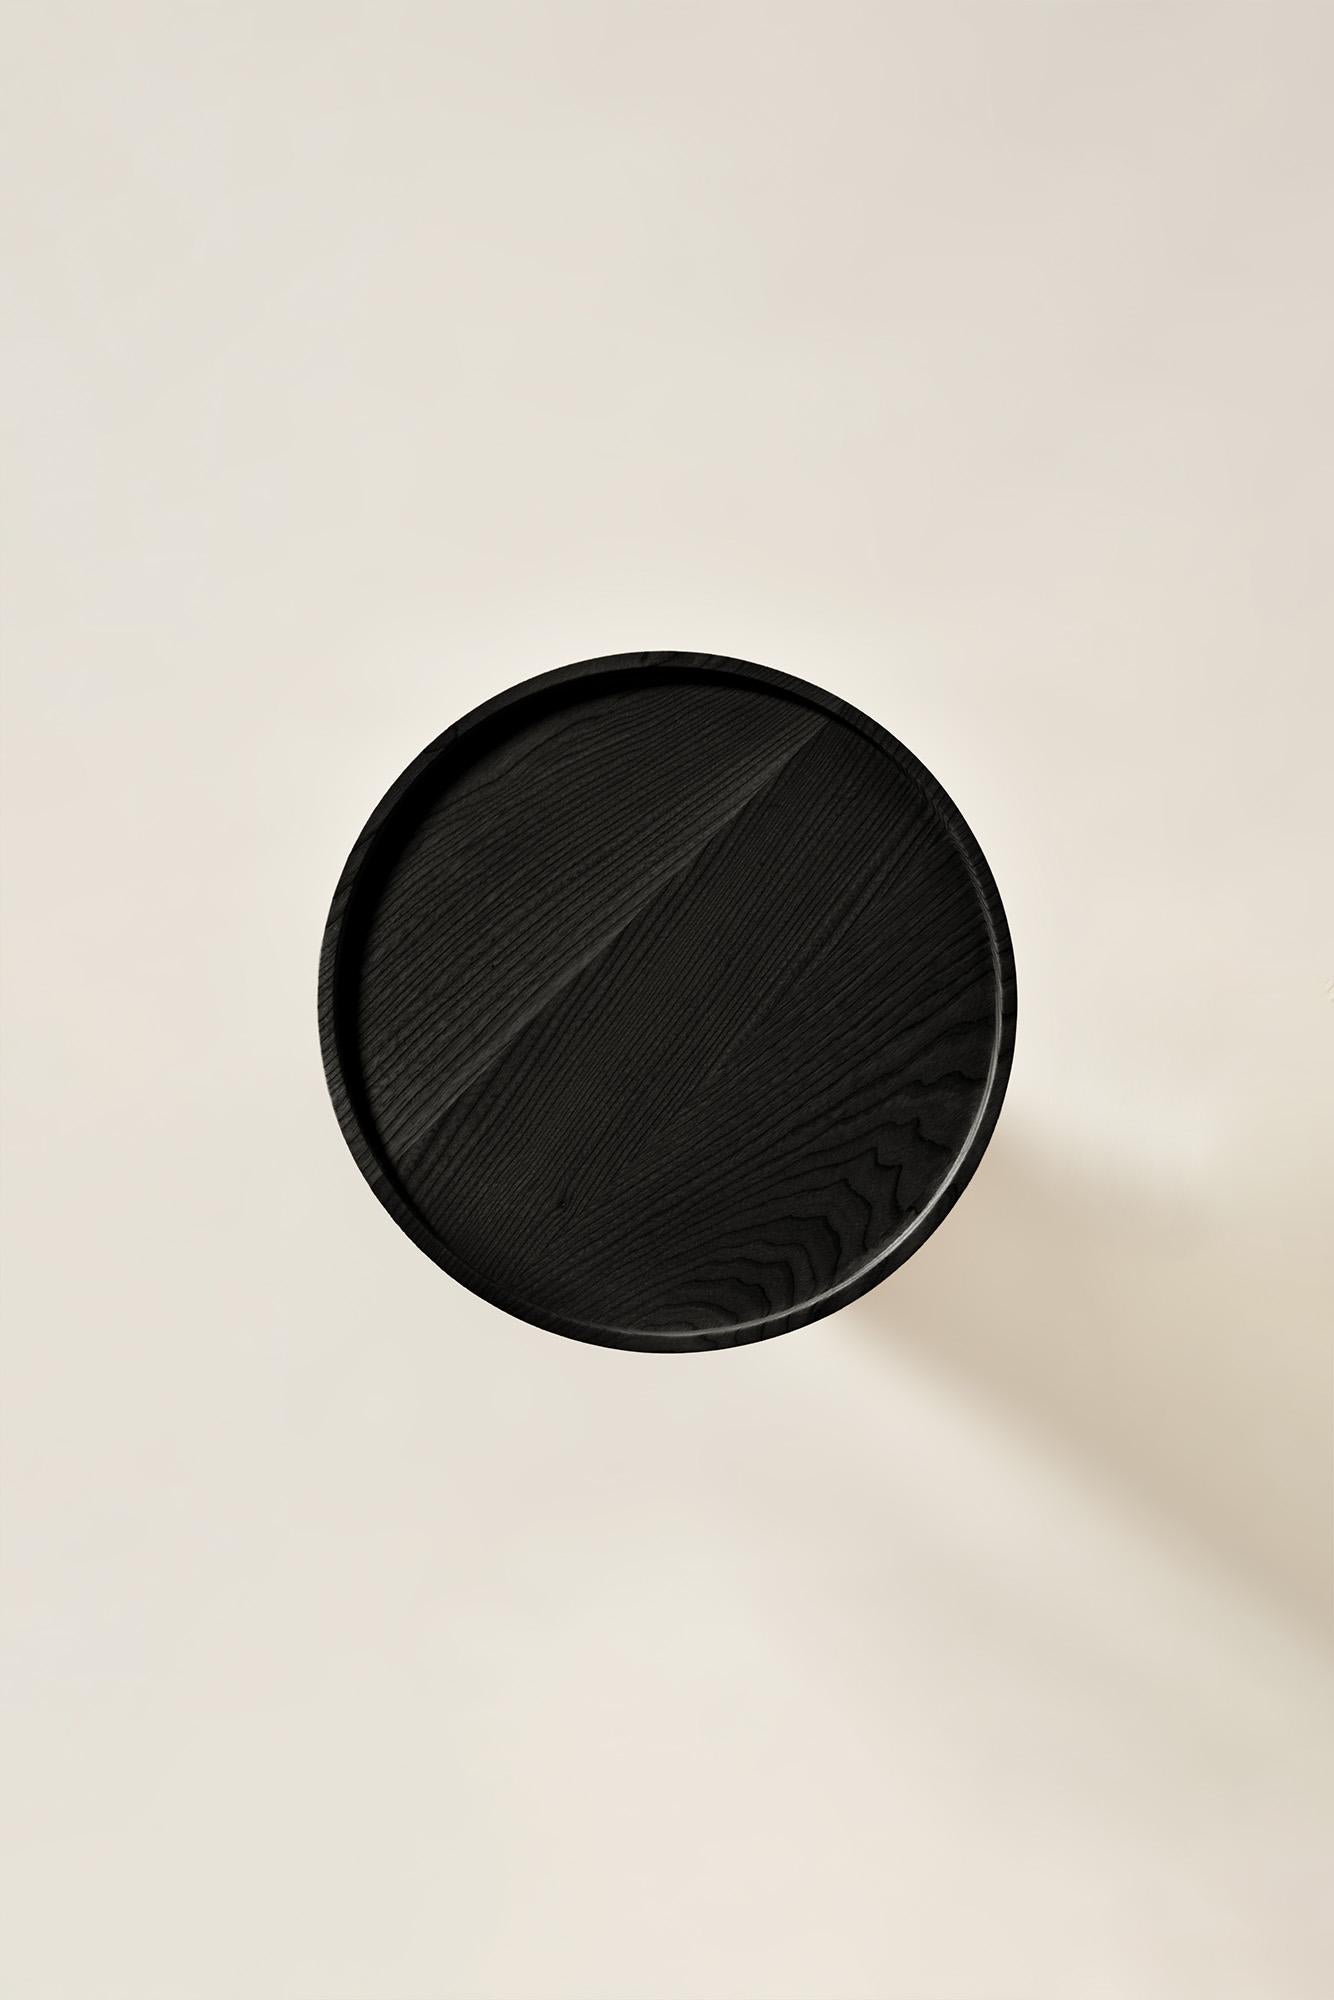 Capitello Solid Wood Coffee Table, Ash in Black Finish, Contemporary For Sale 5